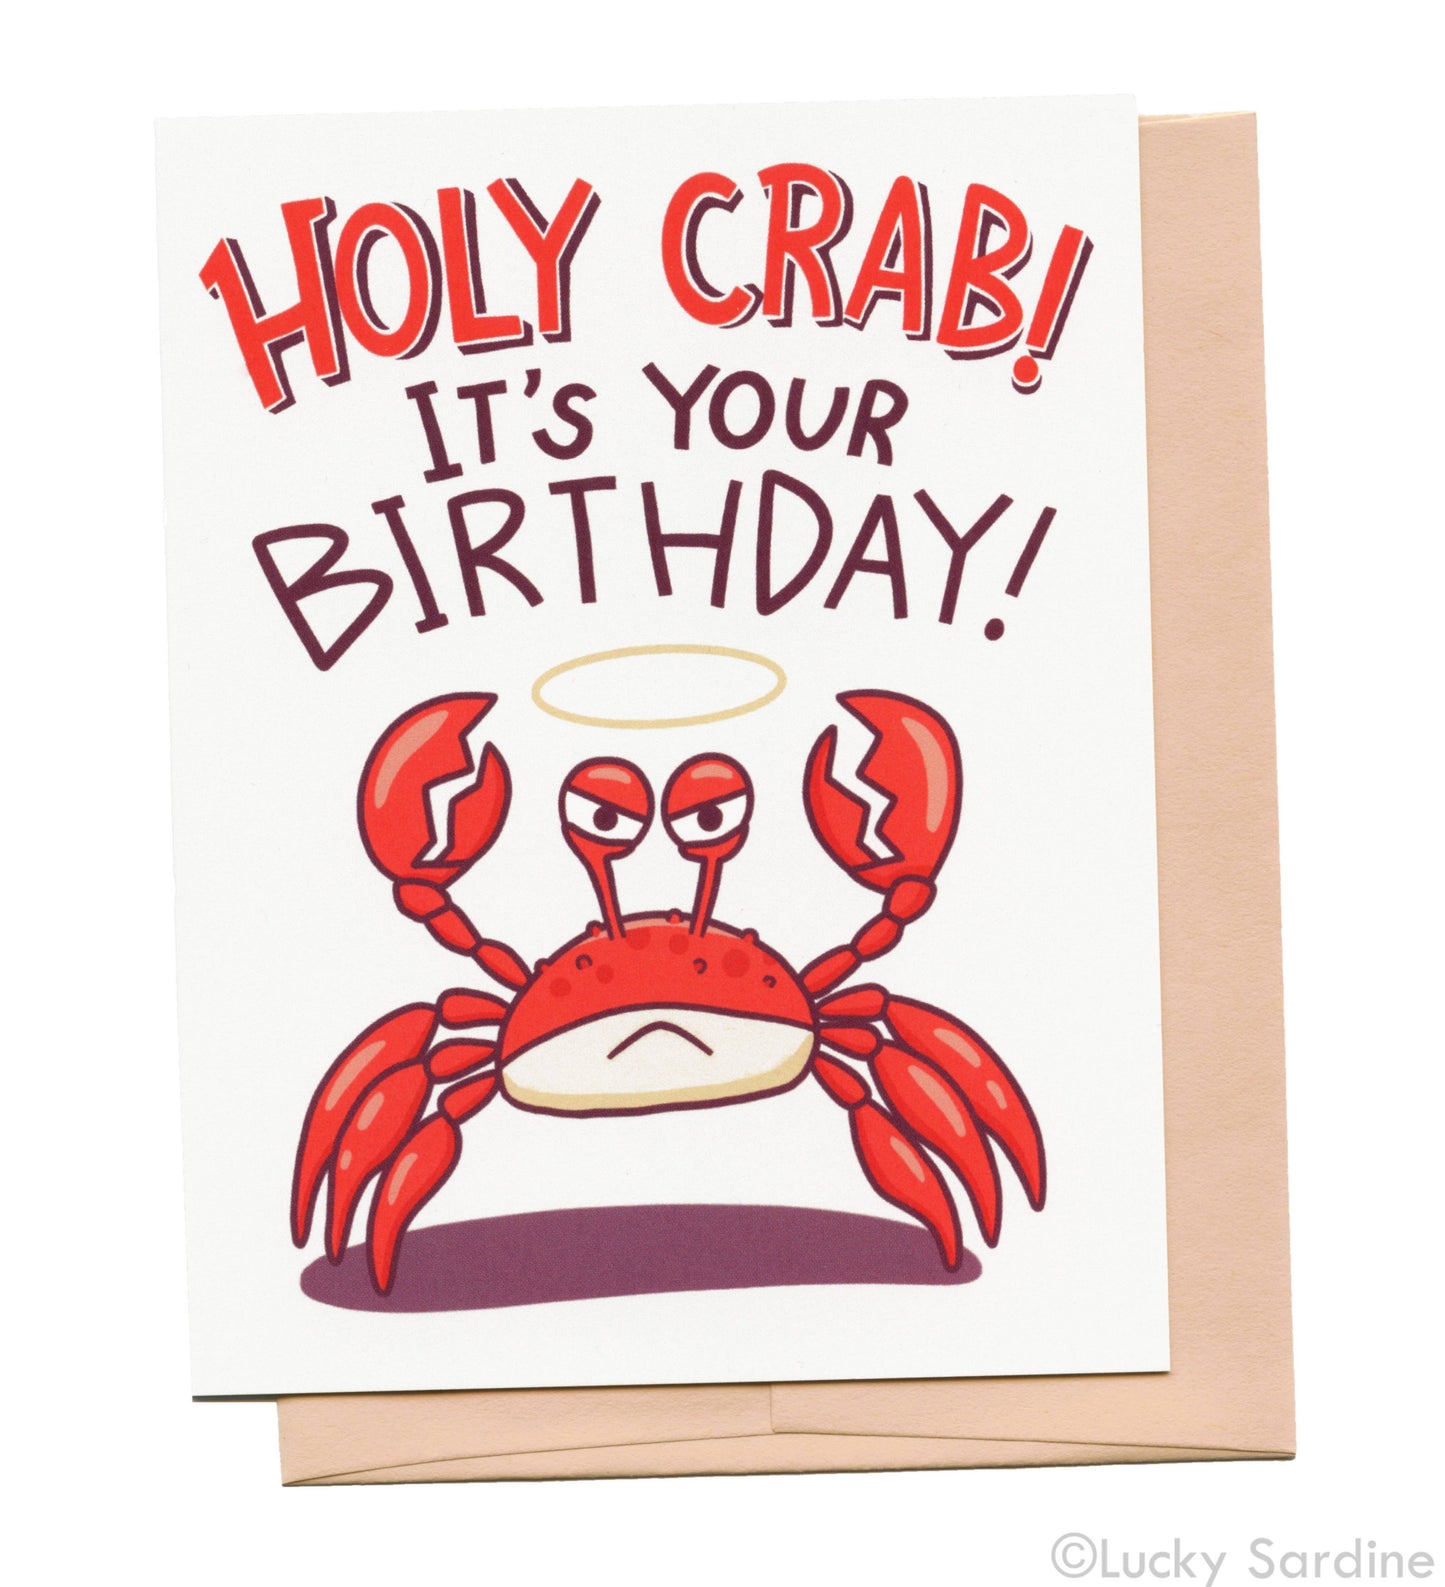 Holy Crab Birthday Card